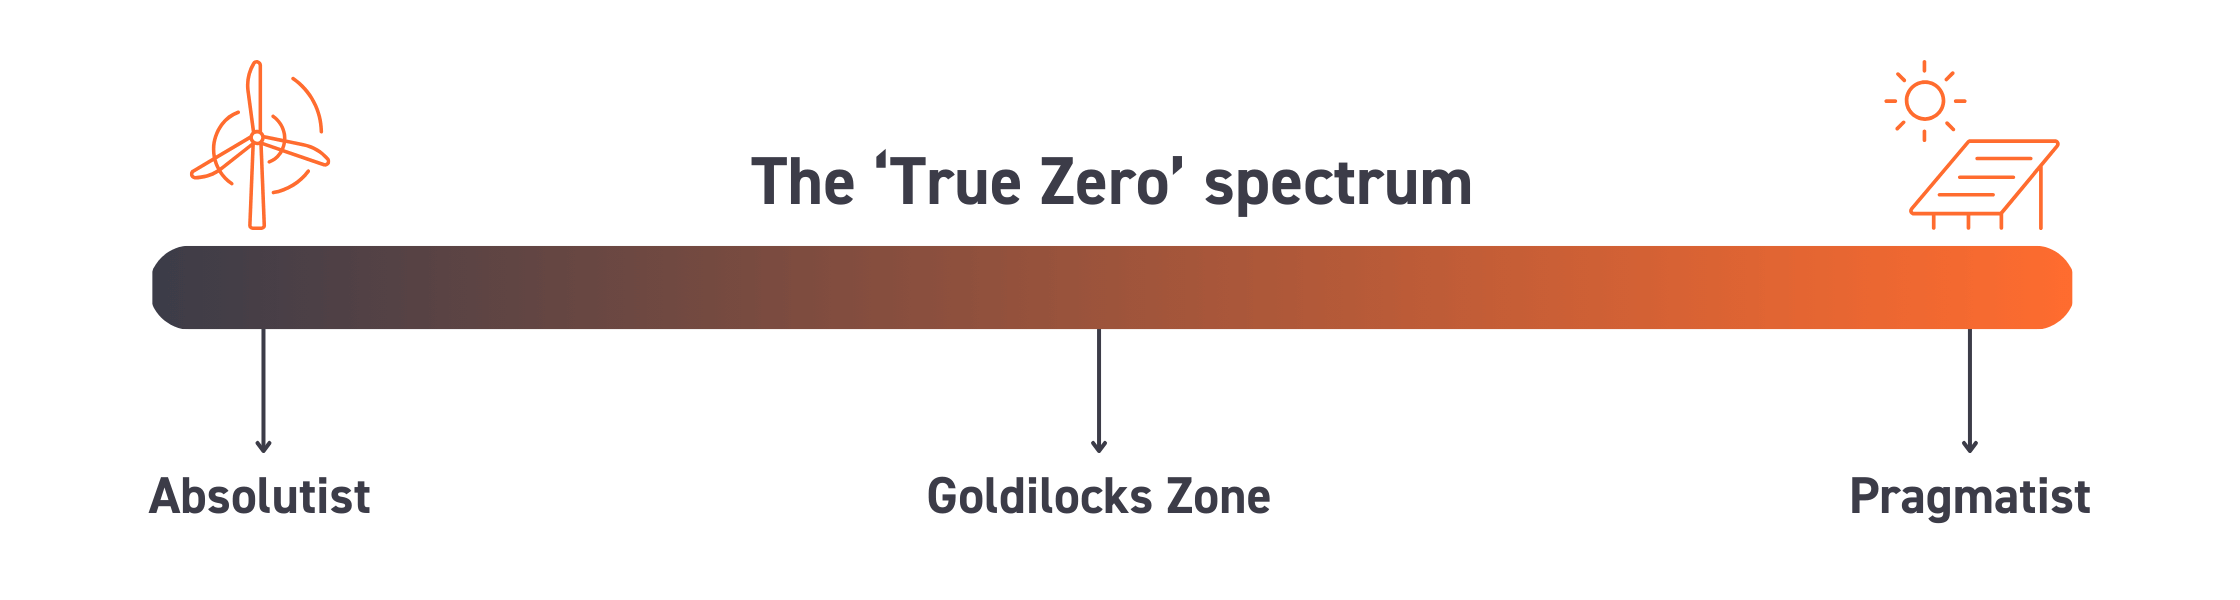 true zero spectrum infographic